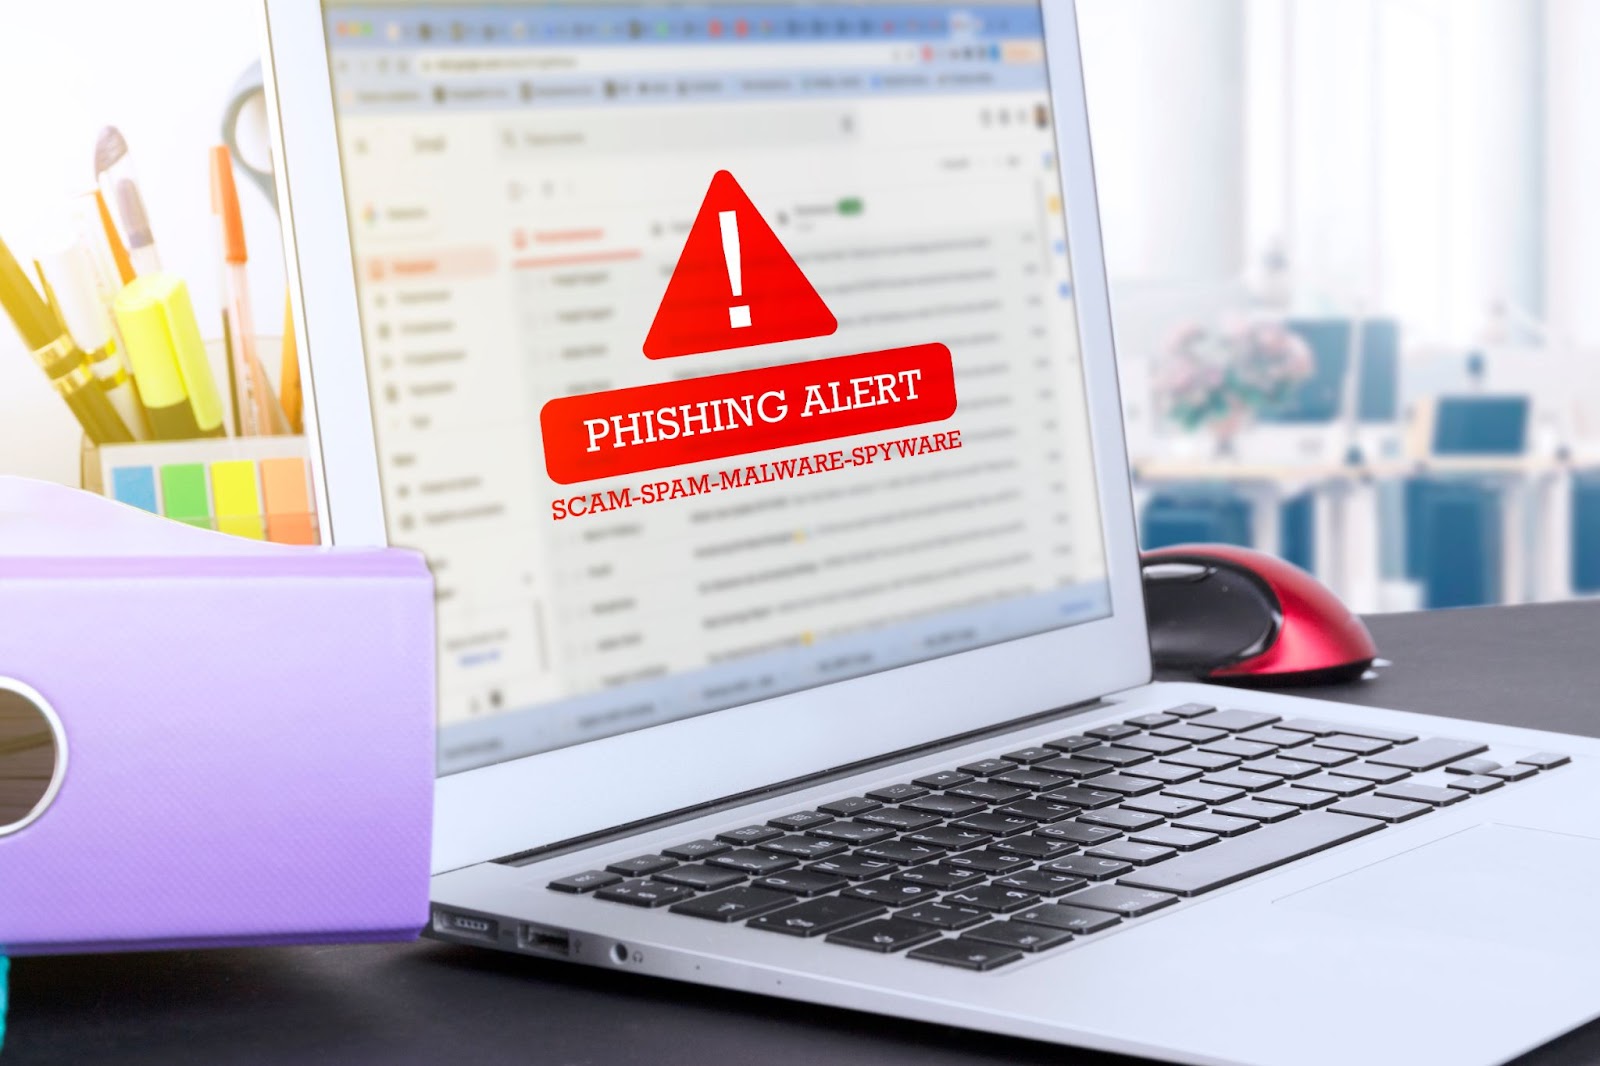 Phishing alert on a computer screen